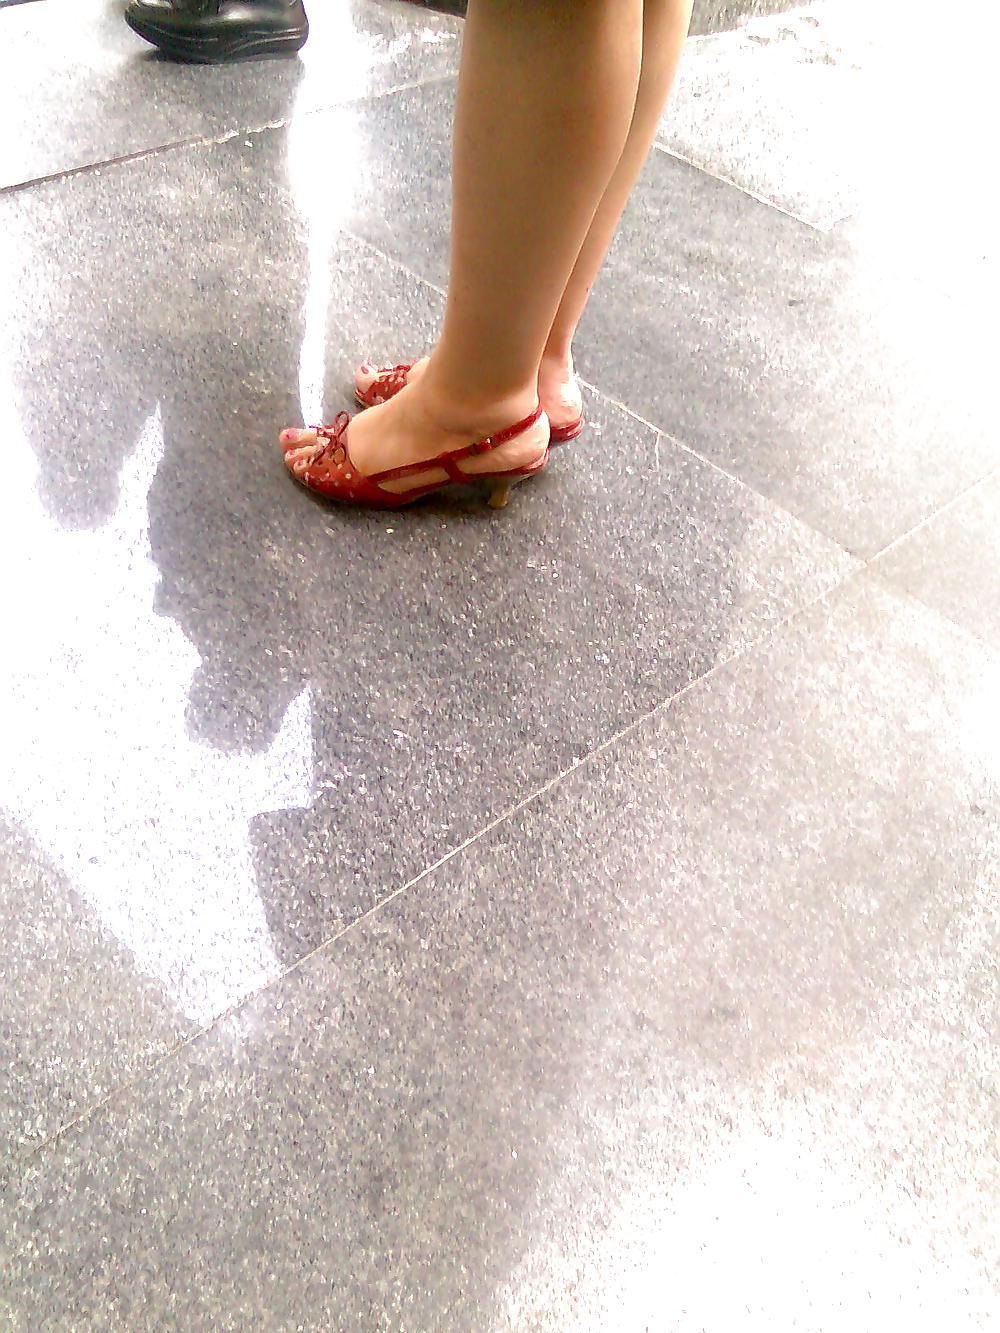 Candid feet red polished toenails #13979811